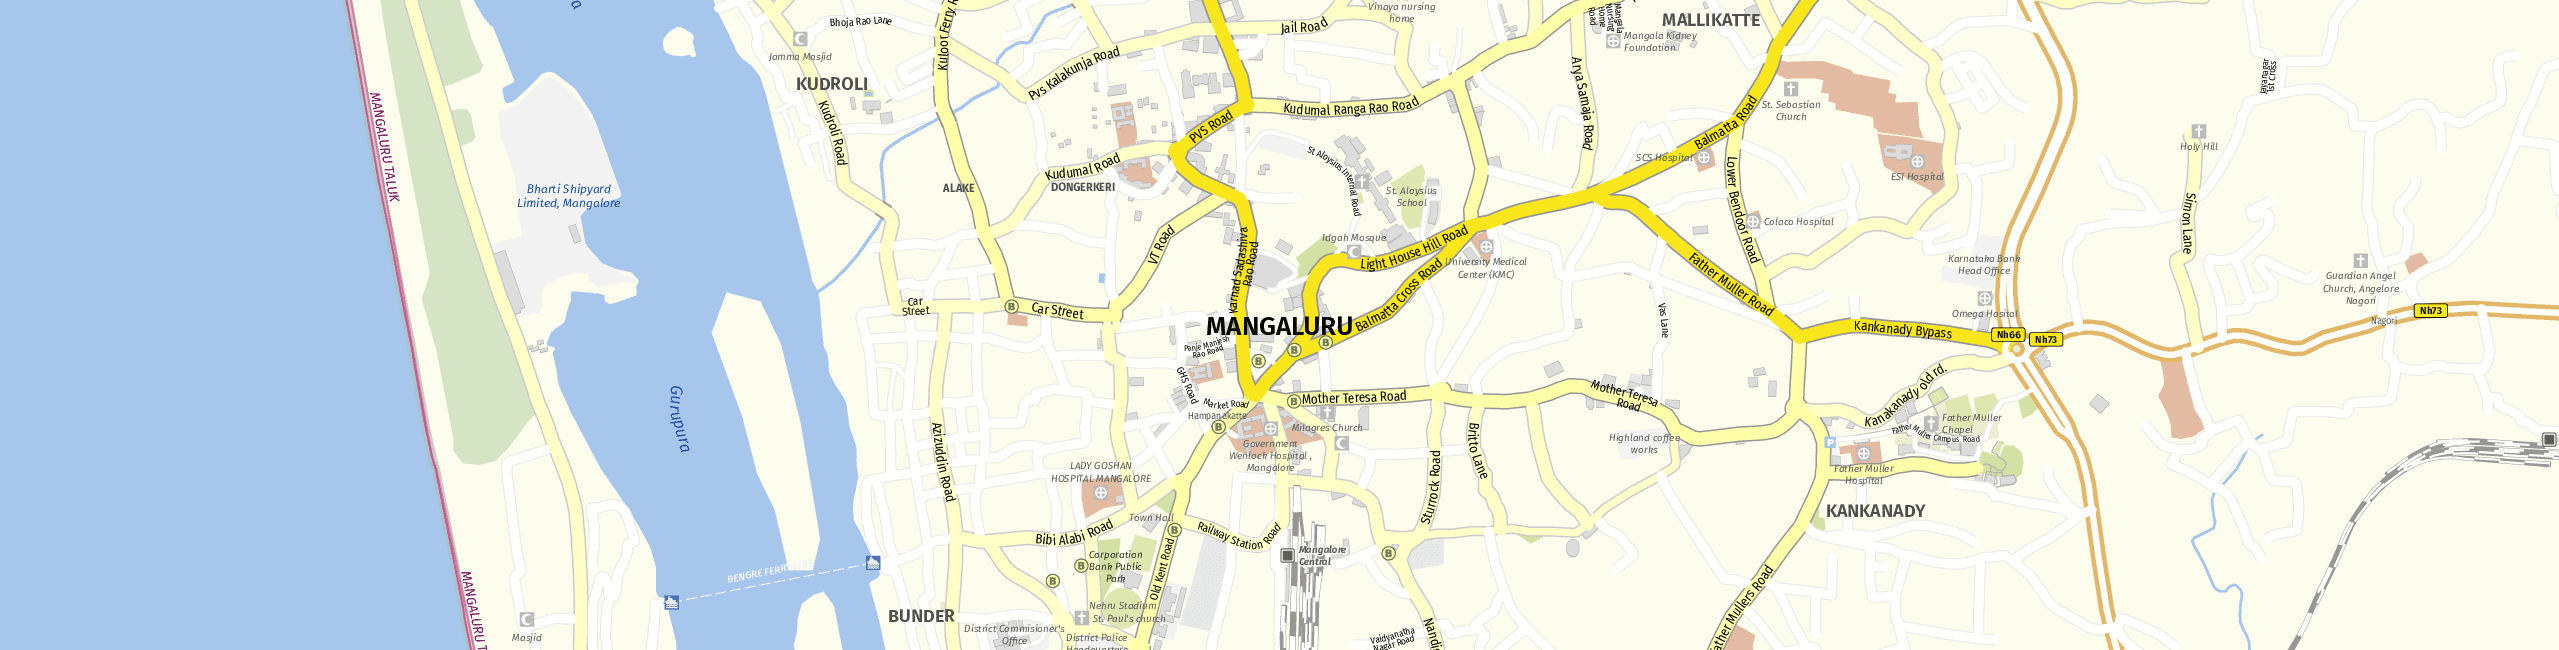 Stadtplan Mangalore zum Downloaden.